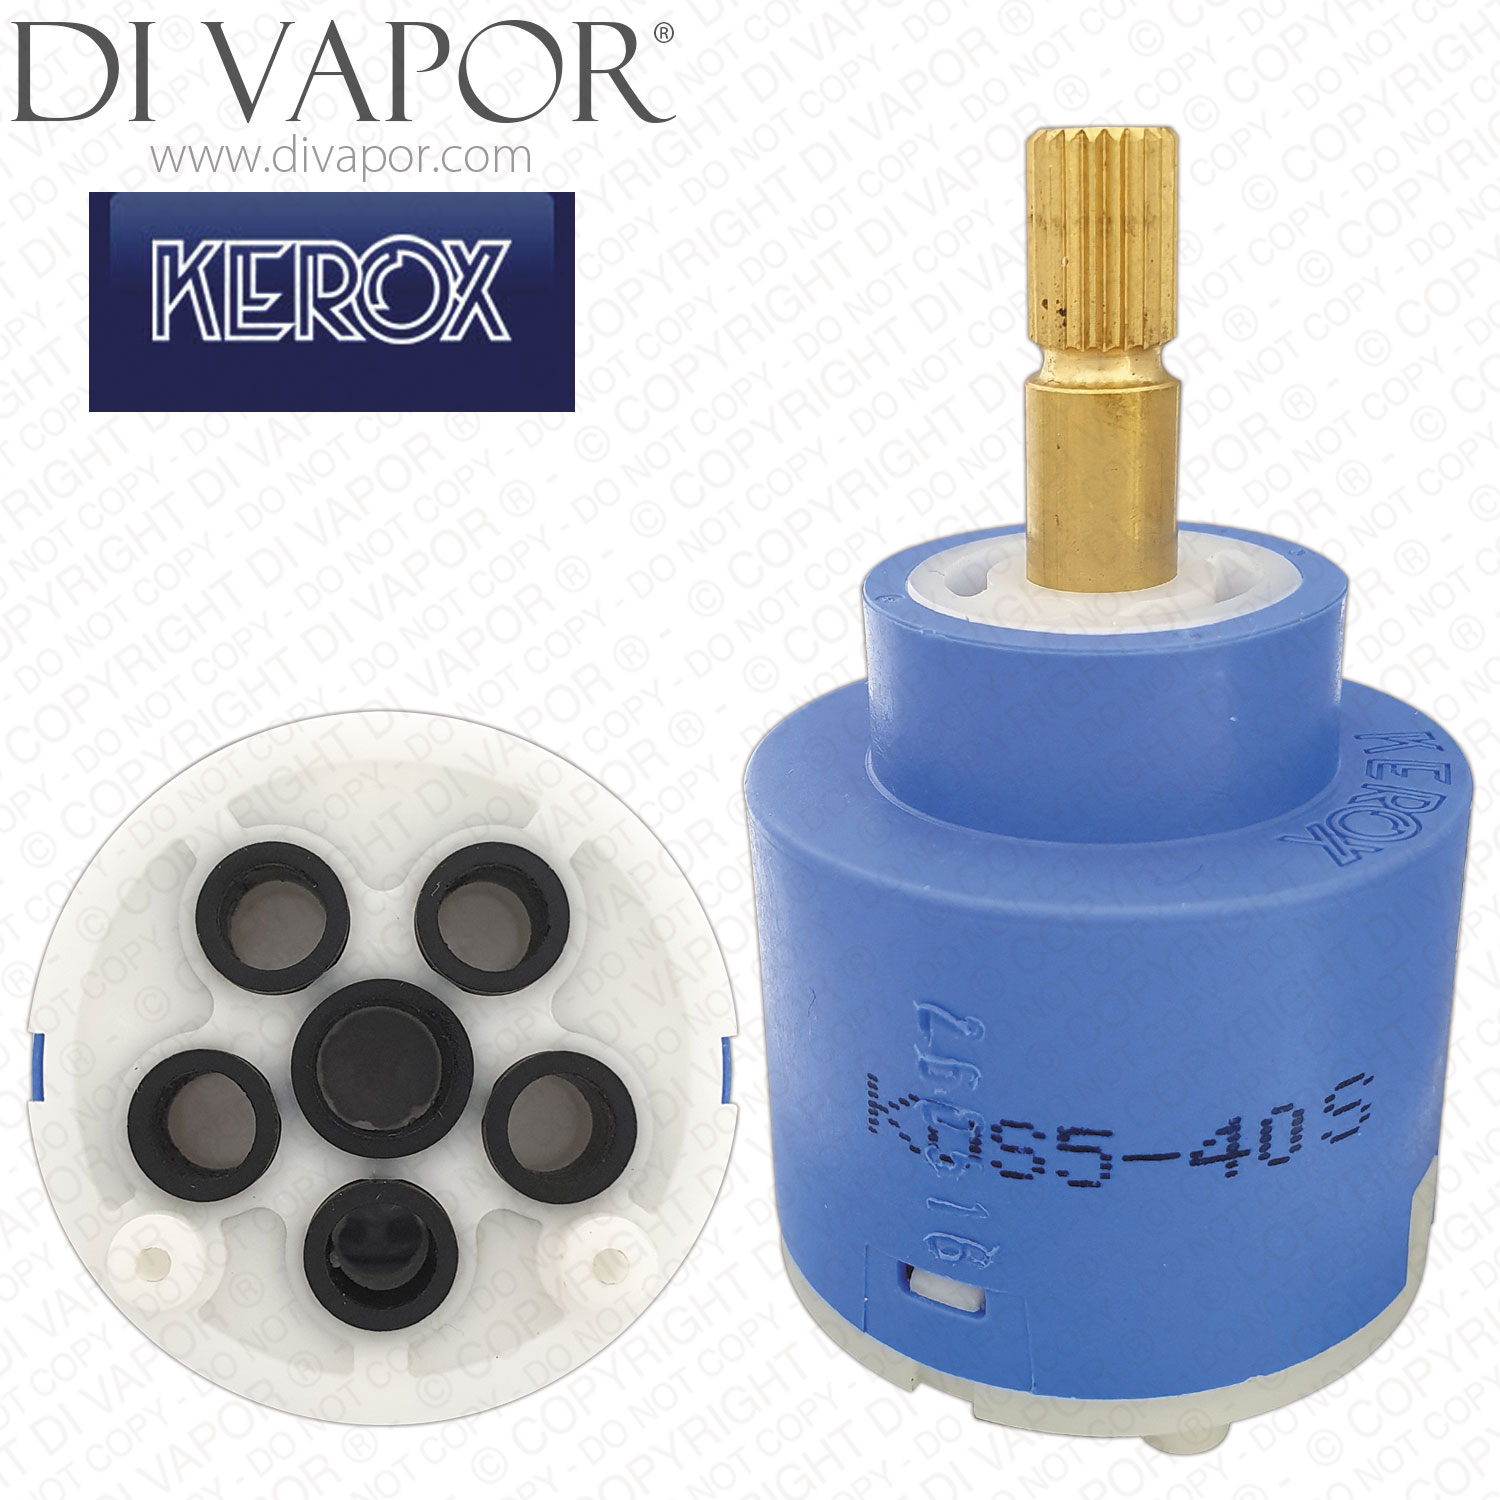 Kerox KDS5-40 Diverter Cartridge